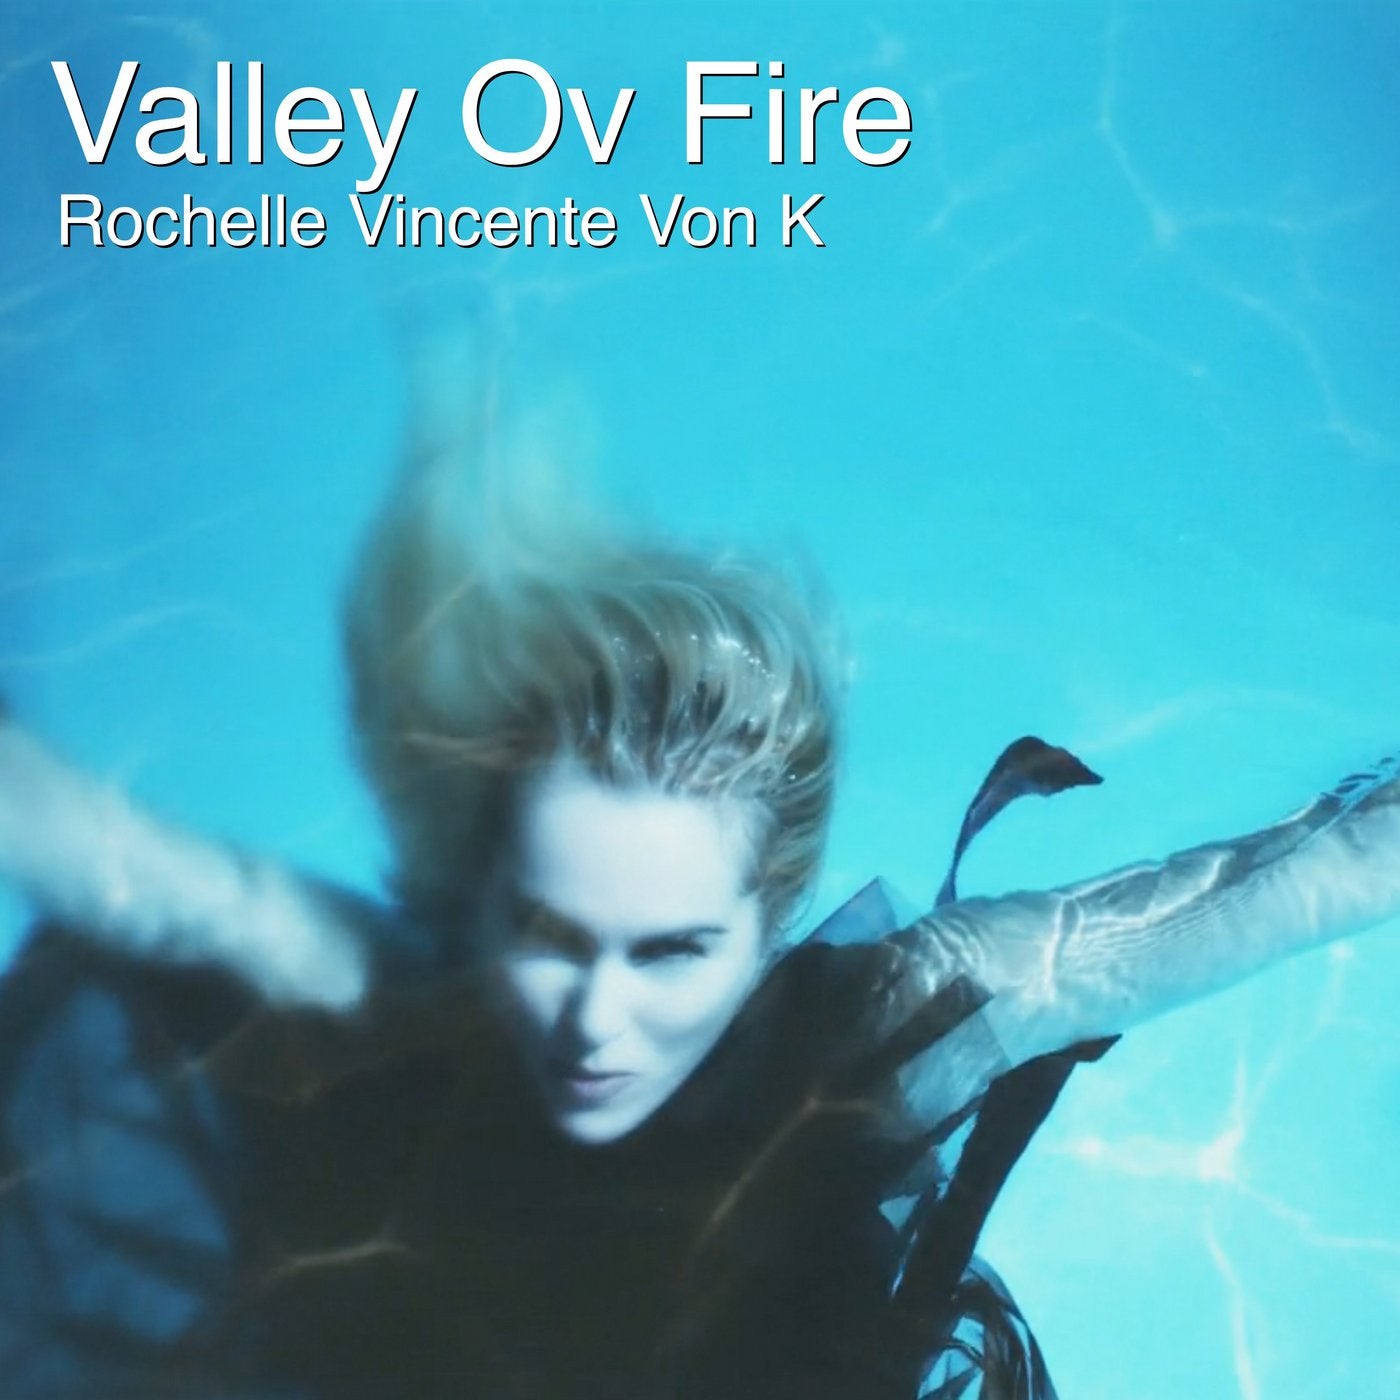 Valley Ov Fire